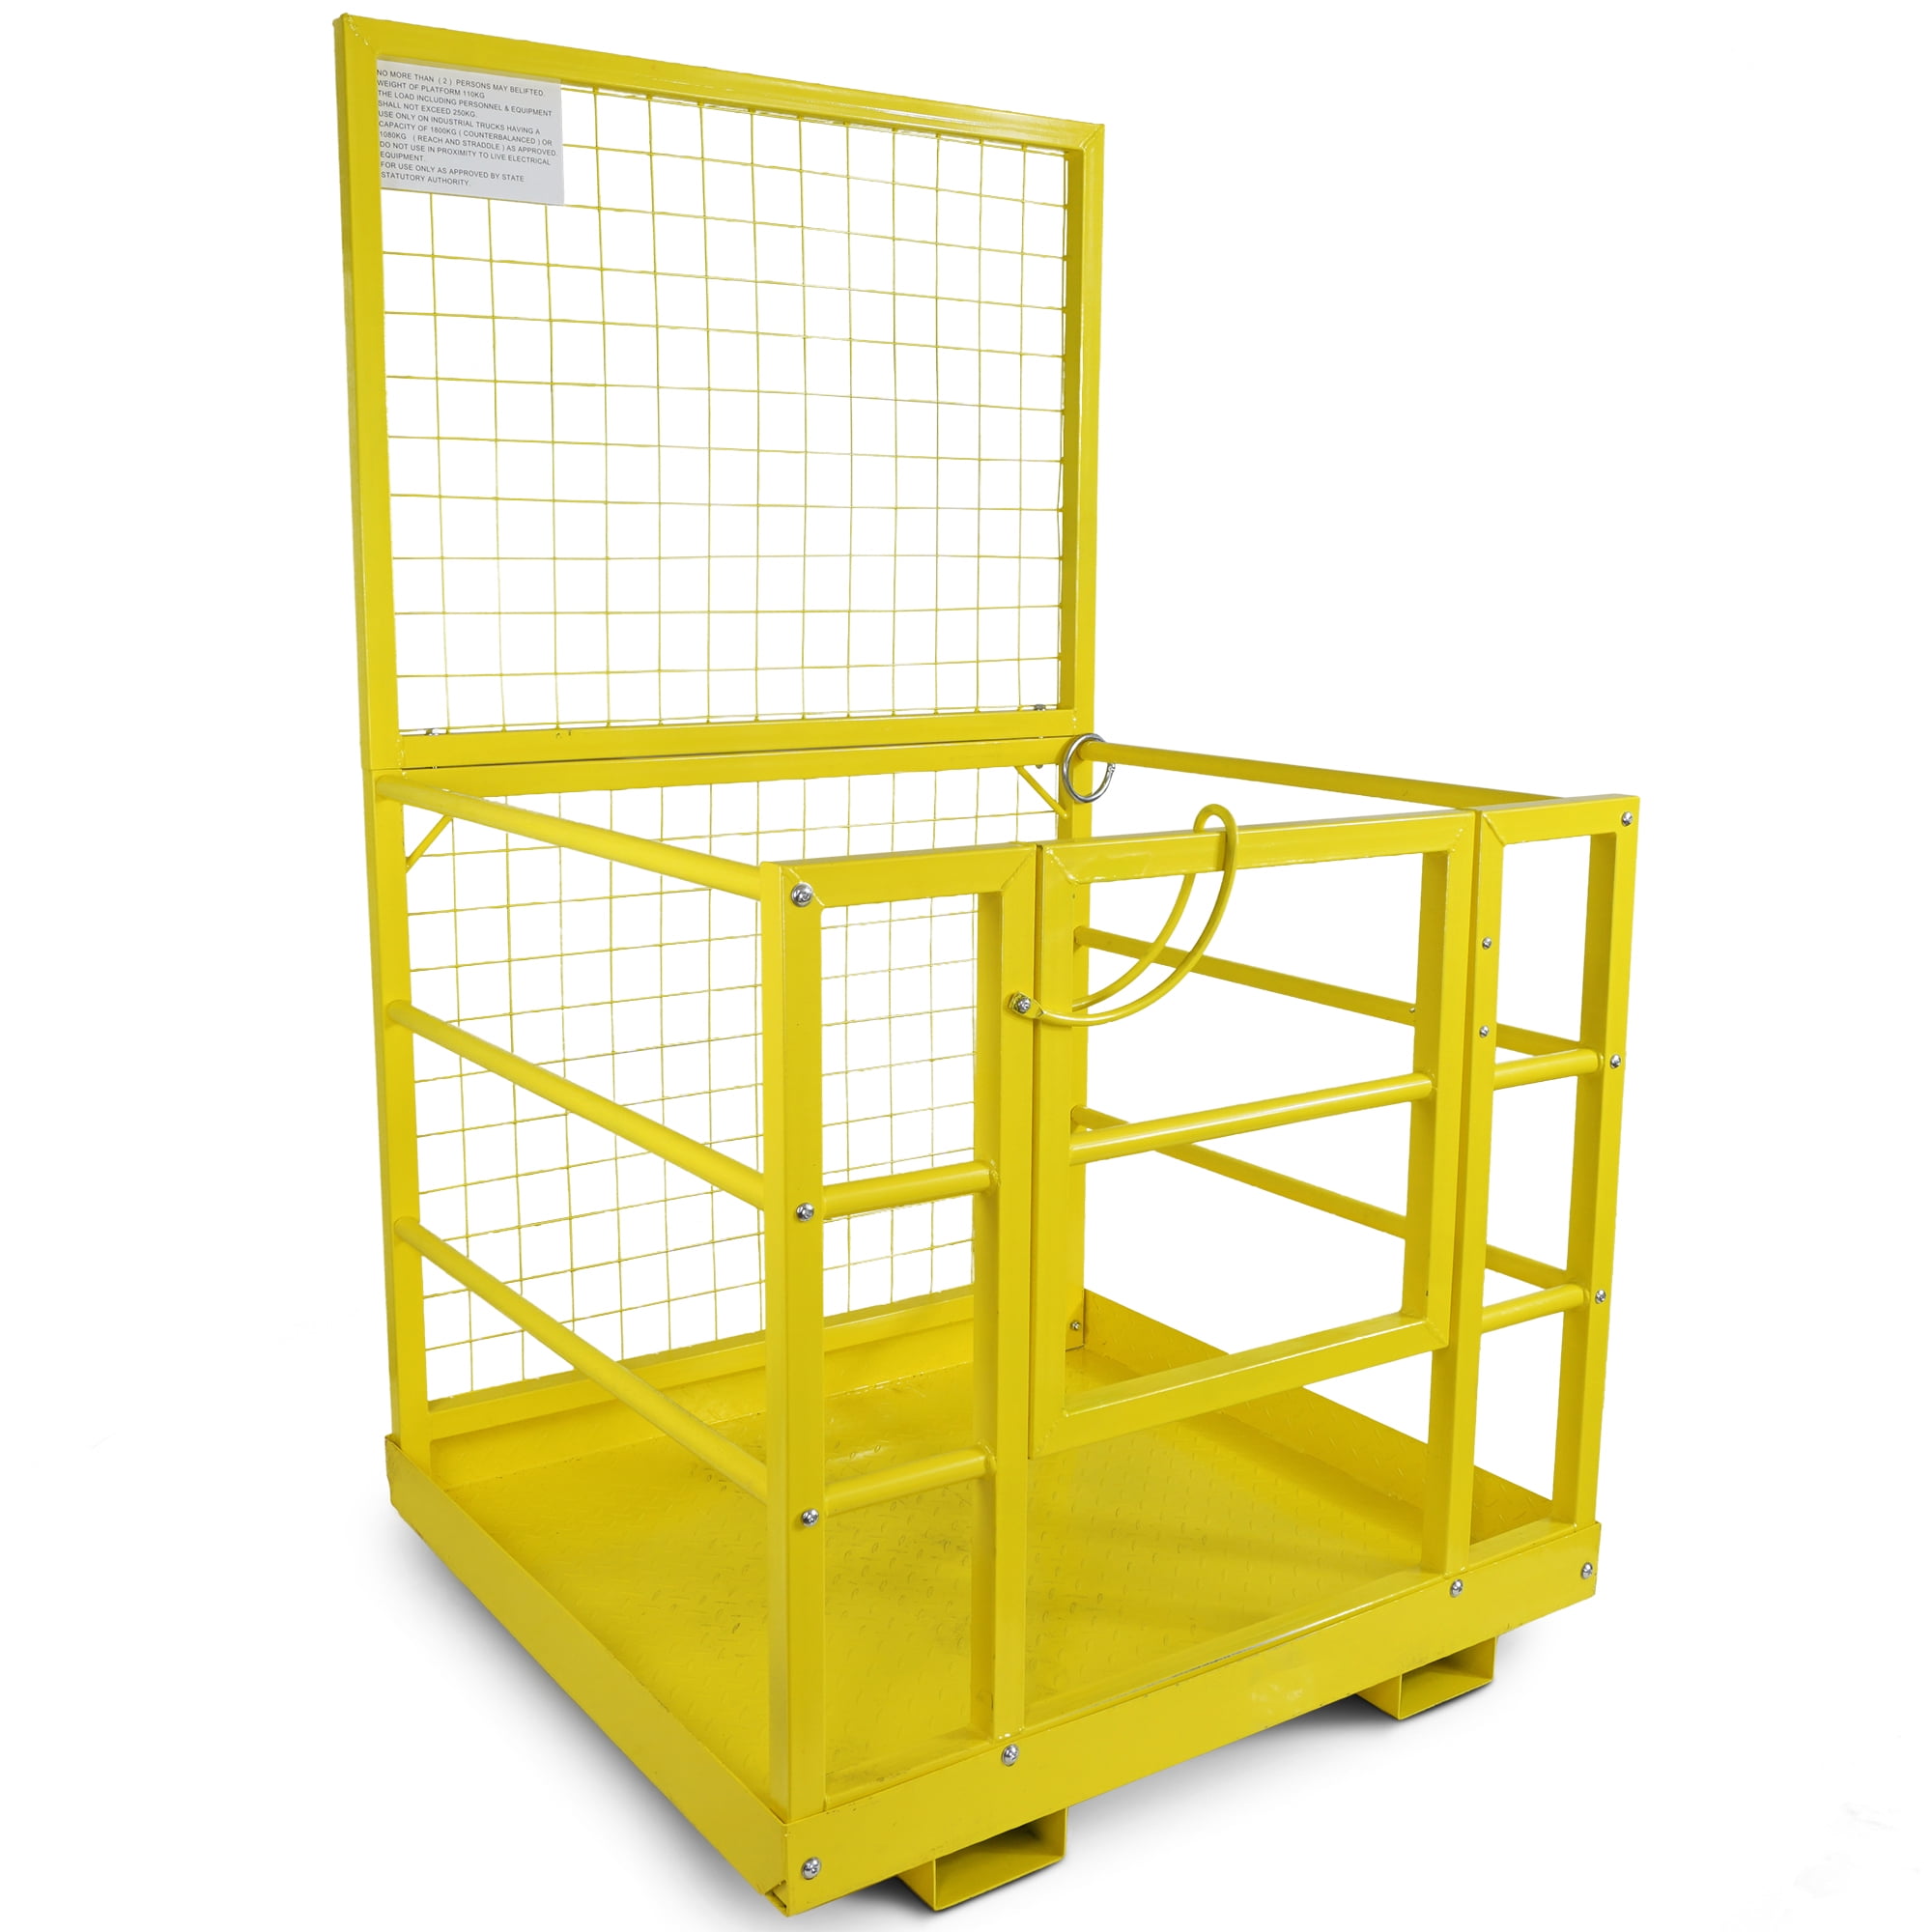 Forklift Safety Cage Work Platform Lift Basket Aerial Fence Rails Yellow 2 Man Walmart Com Walmart Com